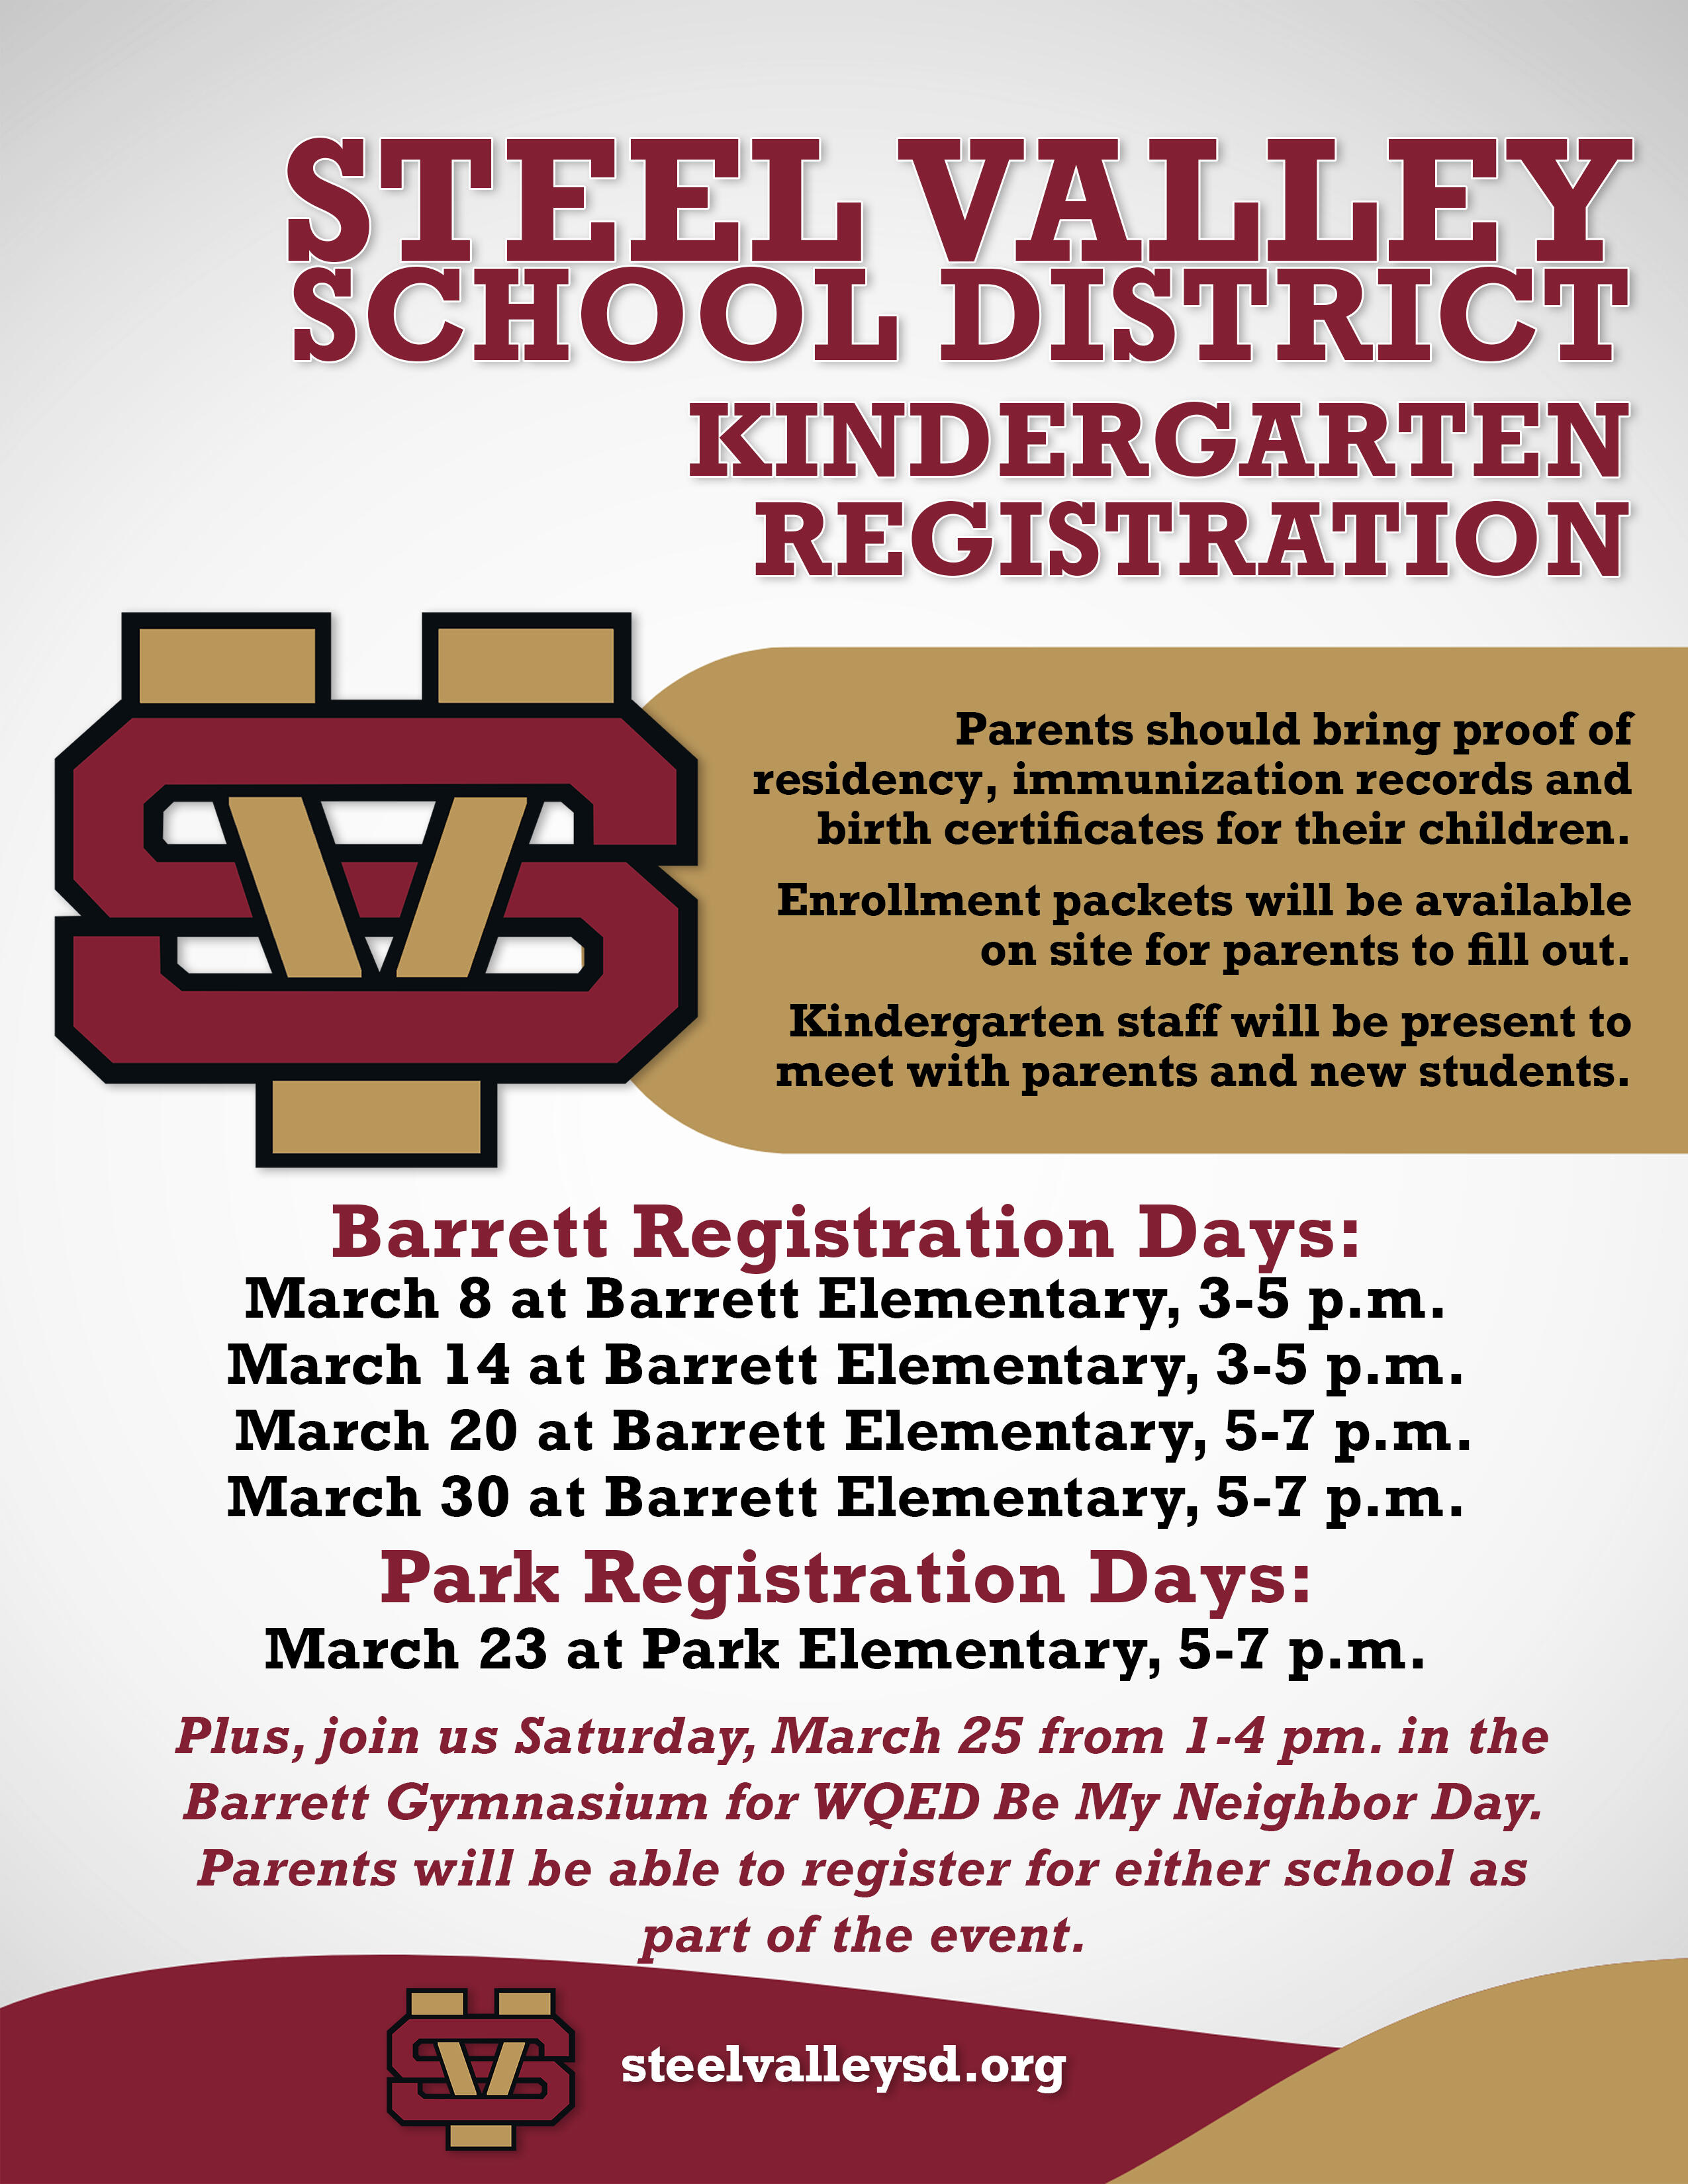 A flyer advertising various dates for kindergarten registration